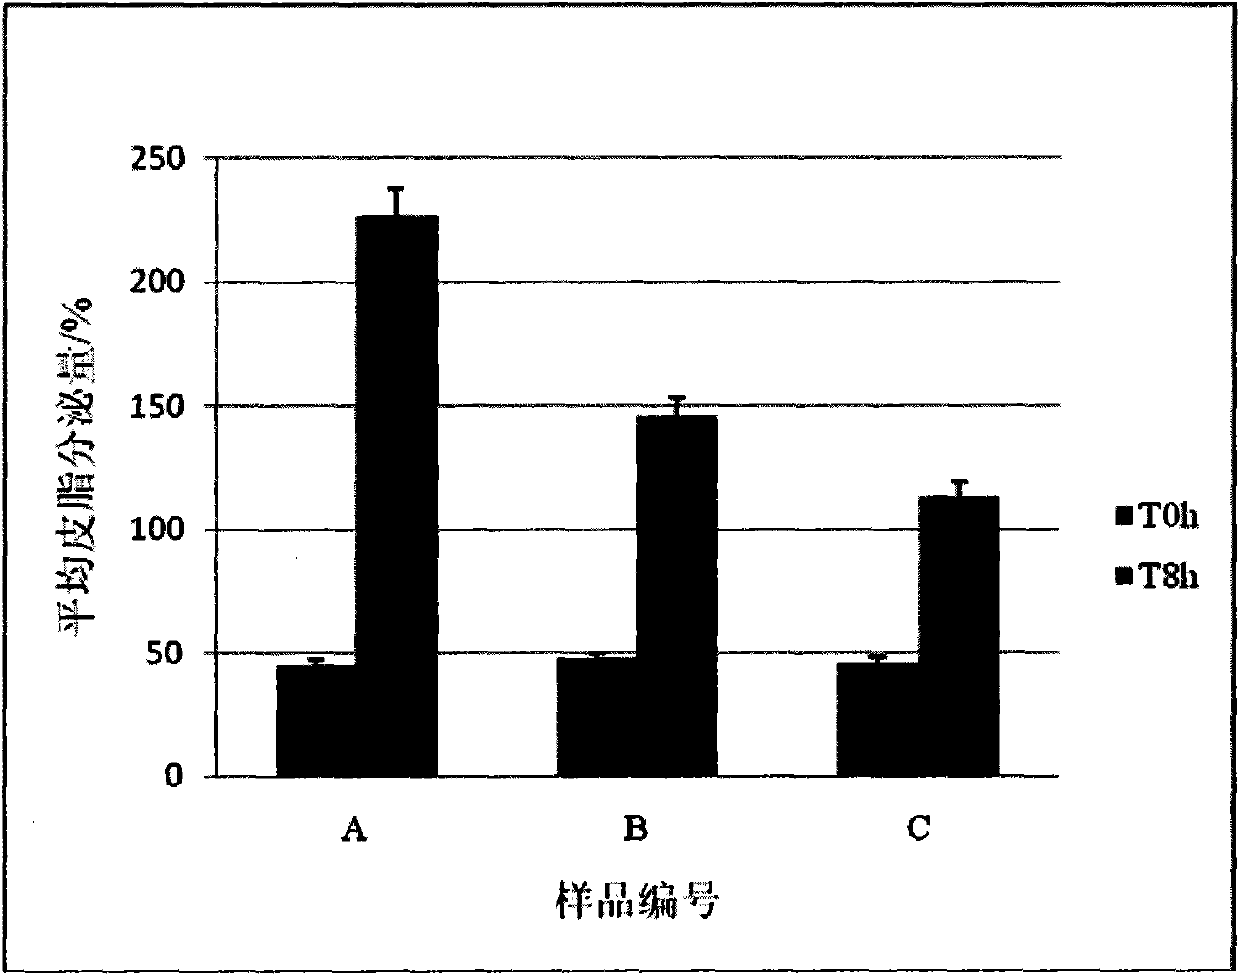 COF plant hydrophile-lipophile balance factor